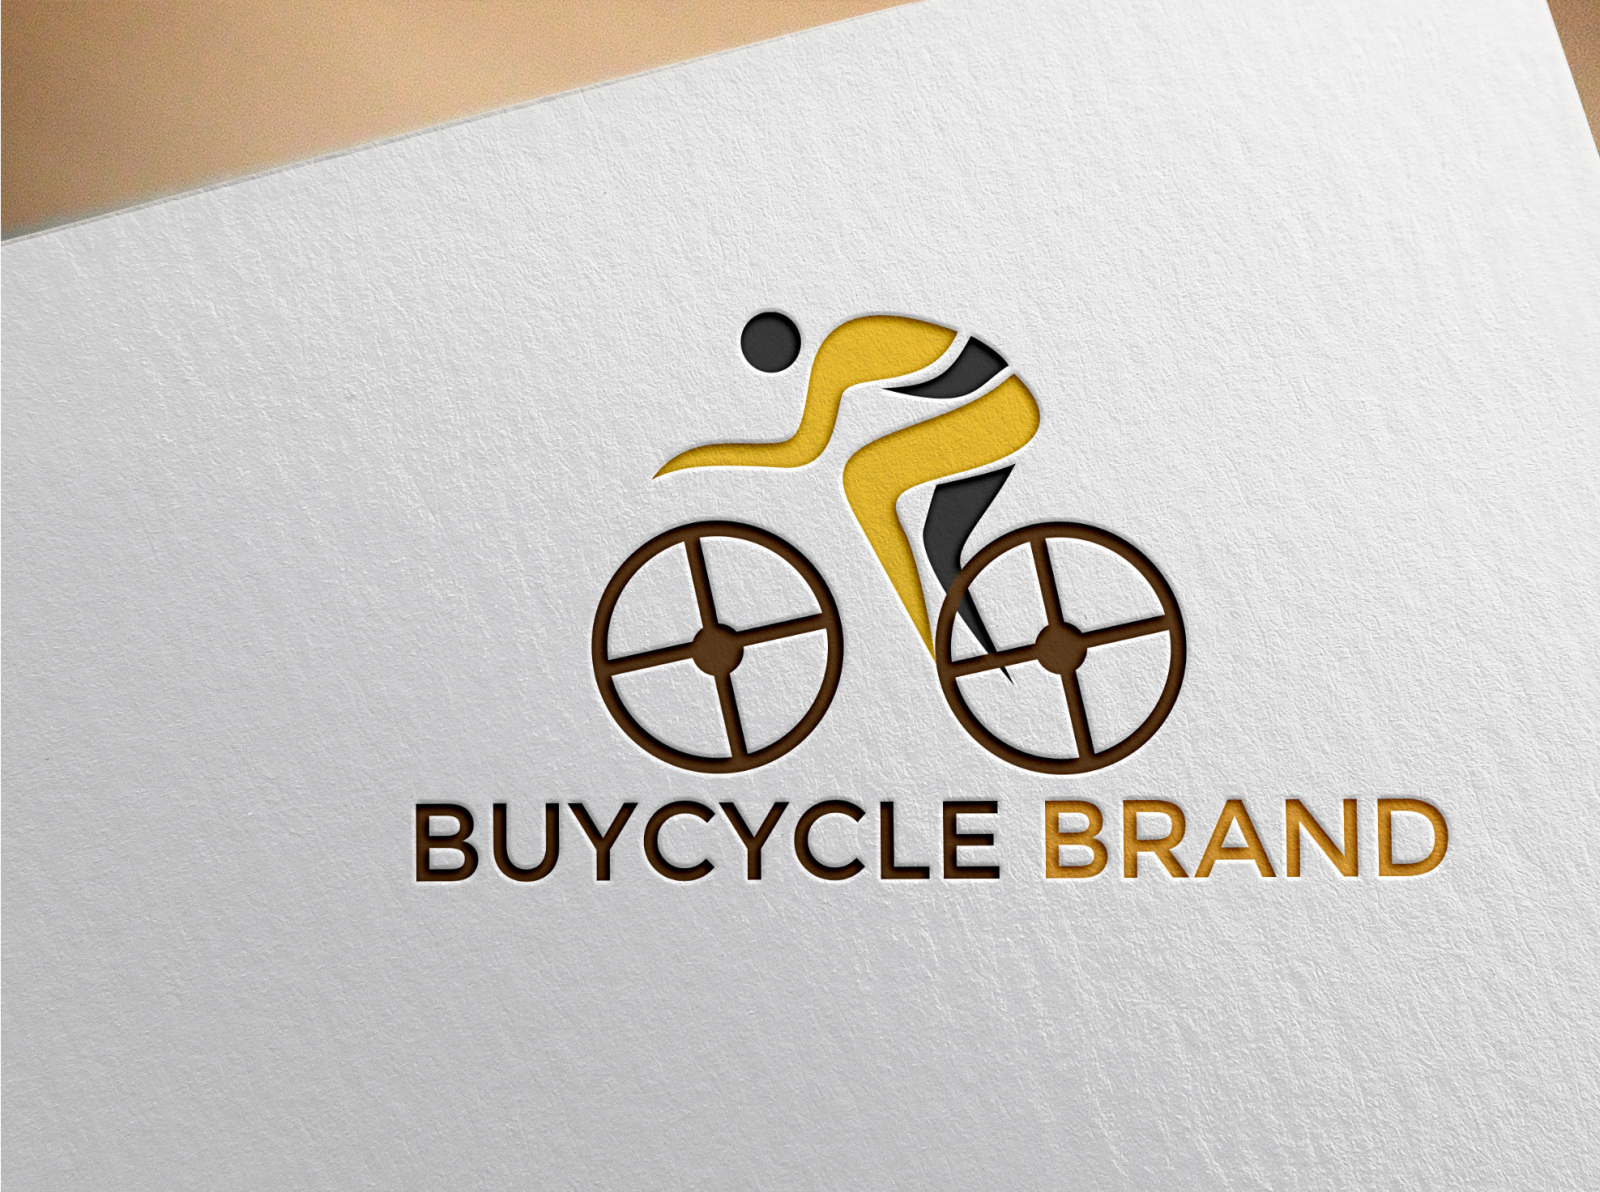 BUYCYCLE BRAND LOGO by Bishajit Kumar on Dribbble